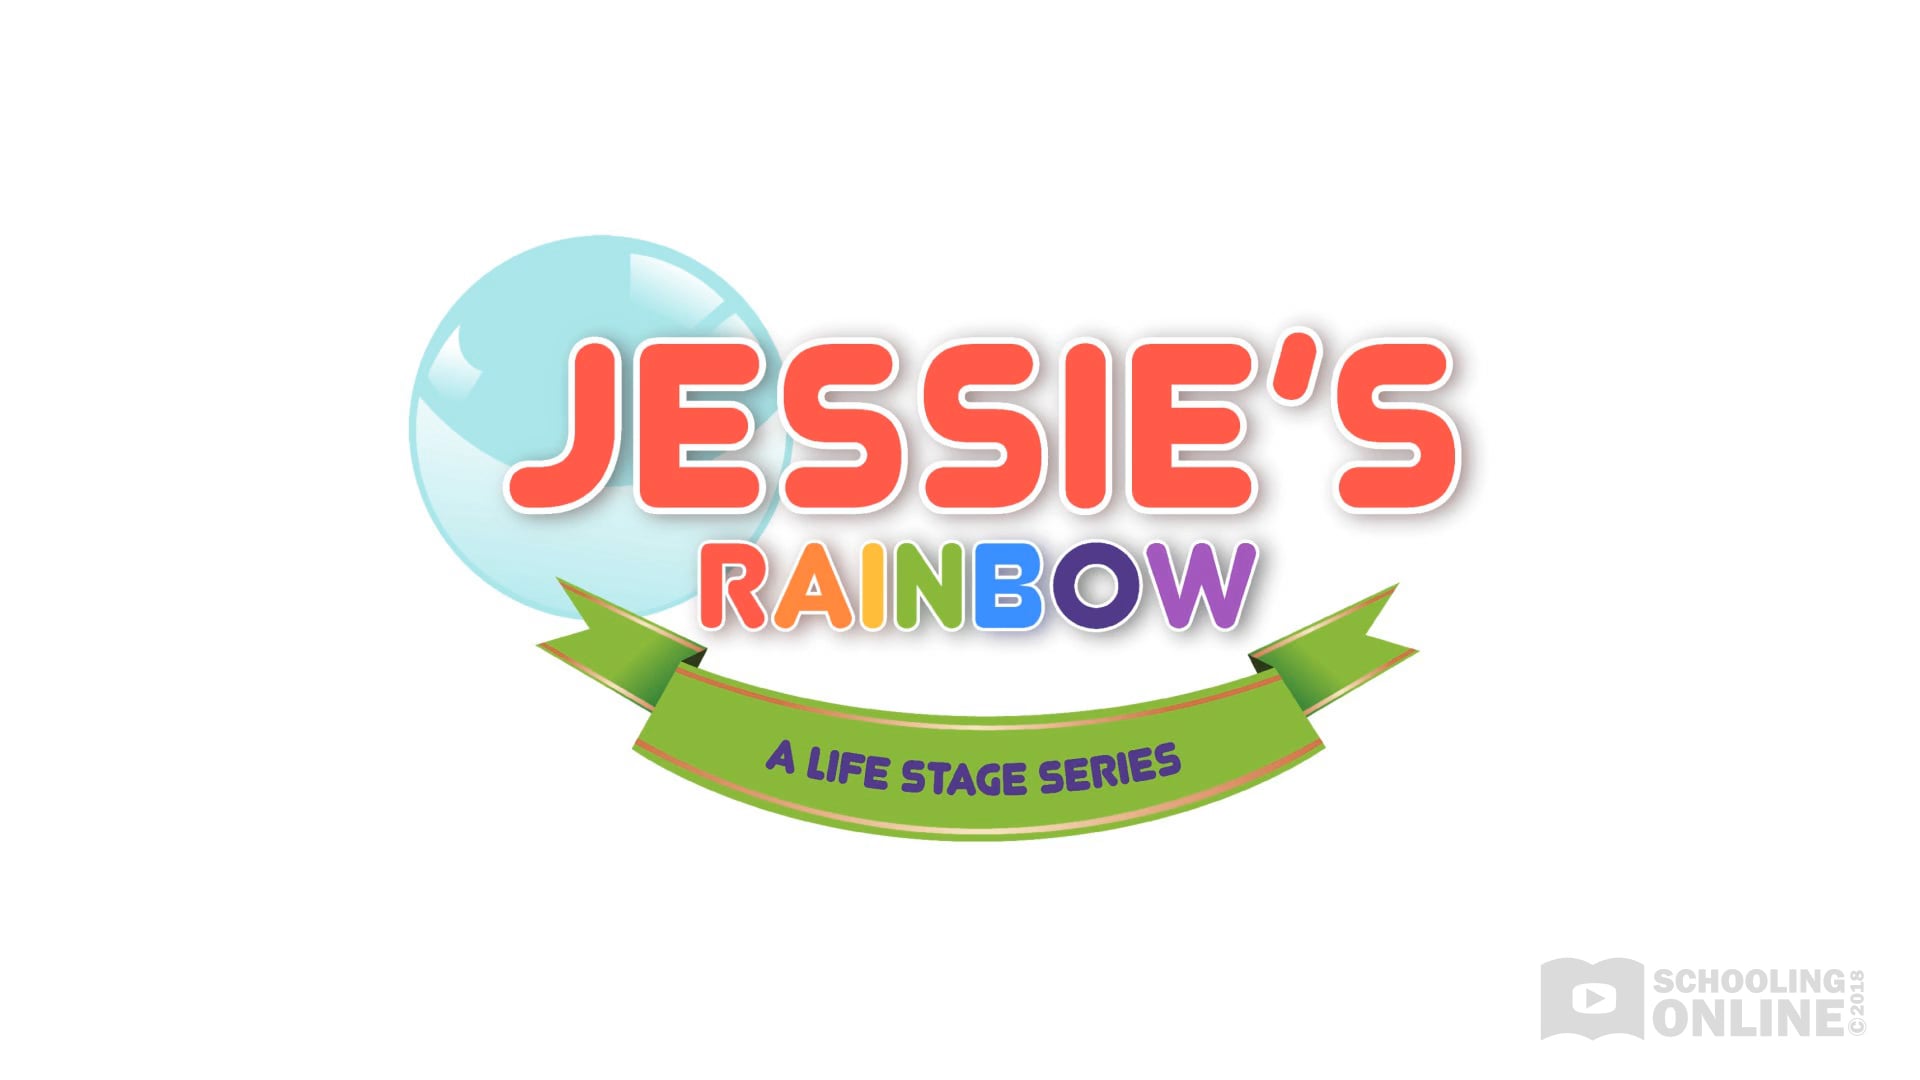 Jessie's Rainbow - The Life Stage Series